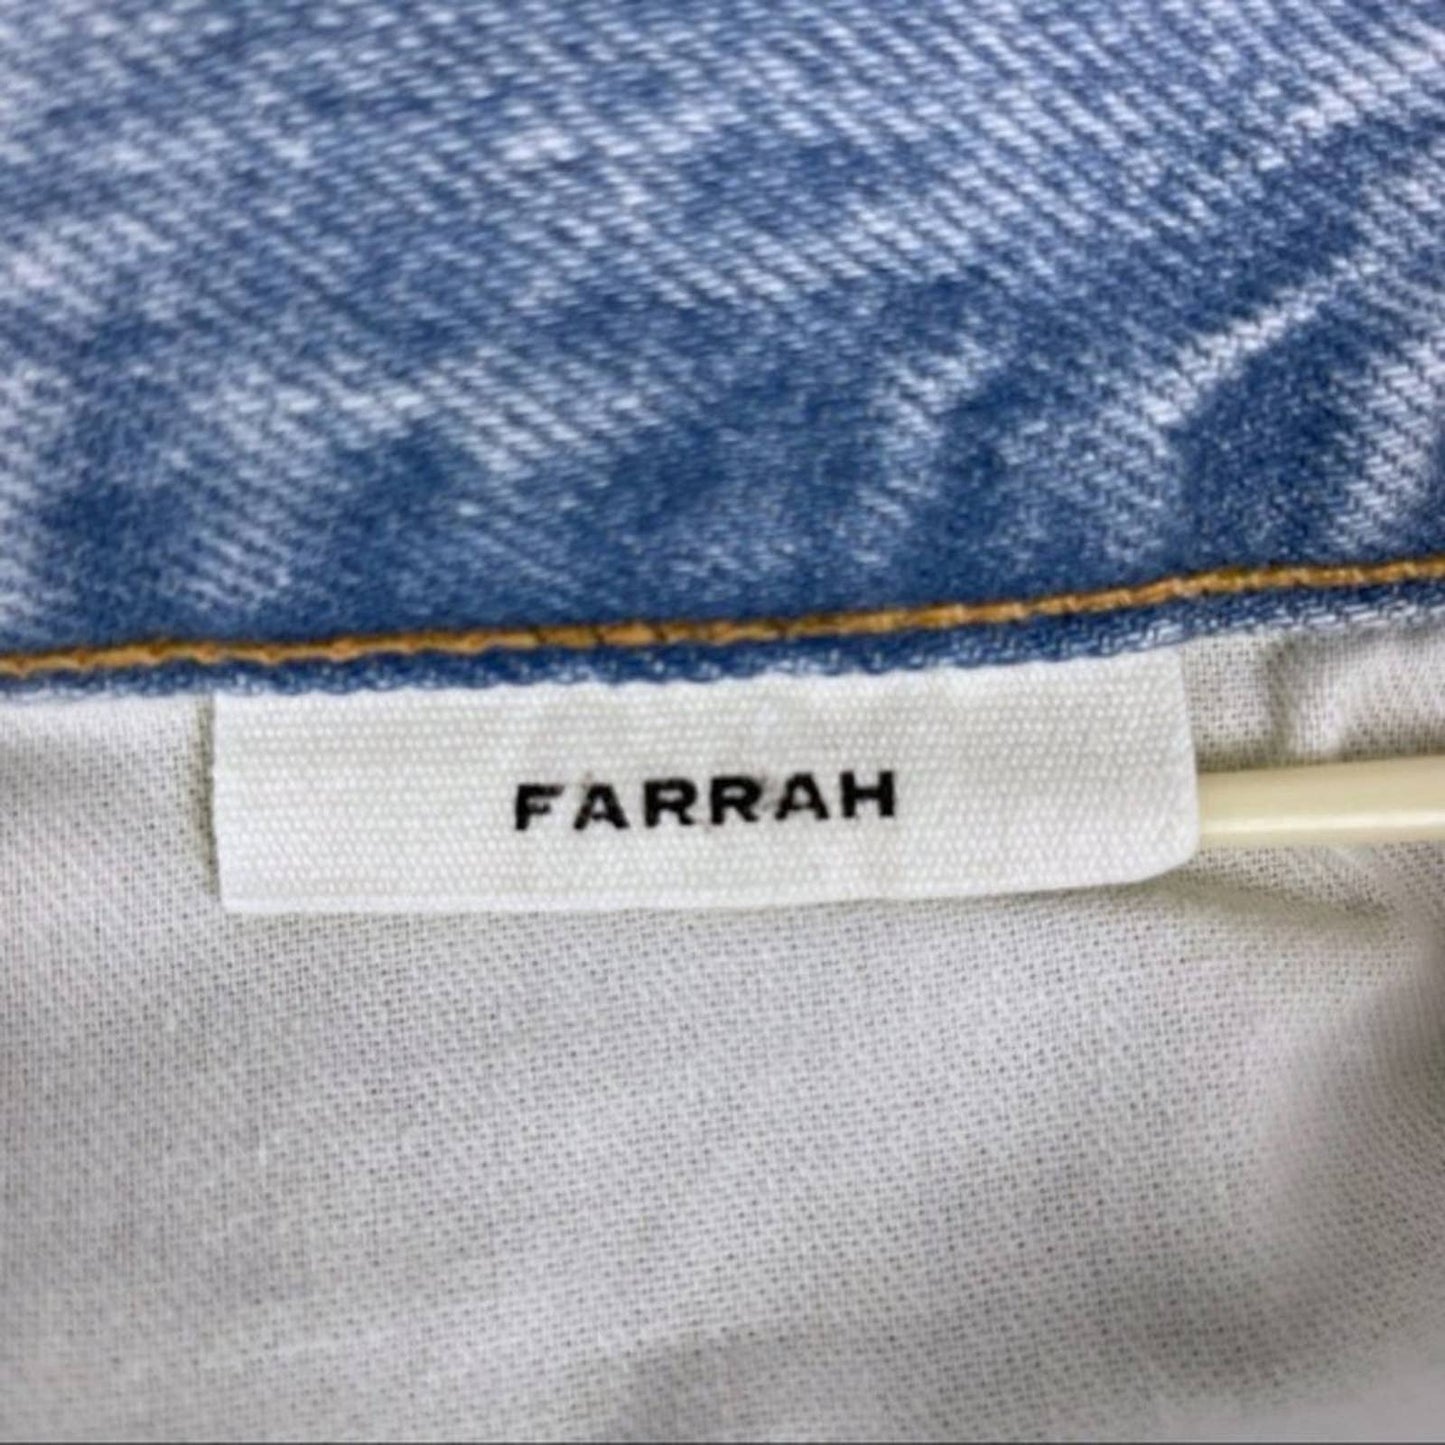 SLVRLAKE Farrah Short Time Worn Wash Light Blue Cutoff High Rise Jean Shorts Size 30